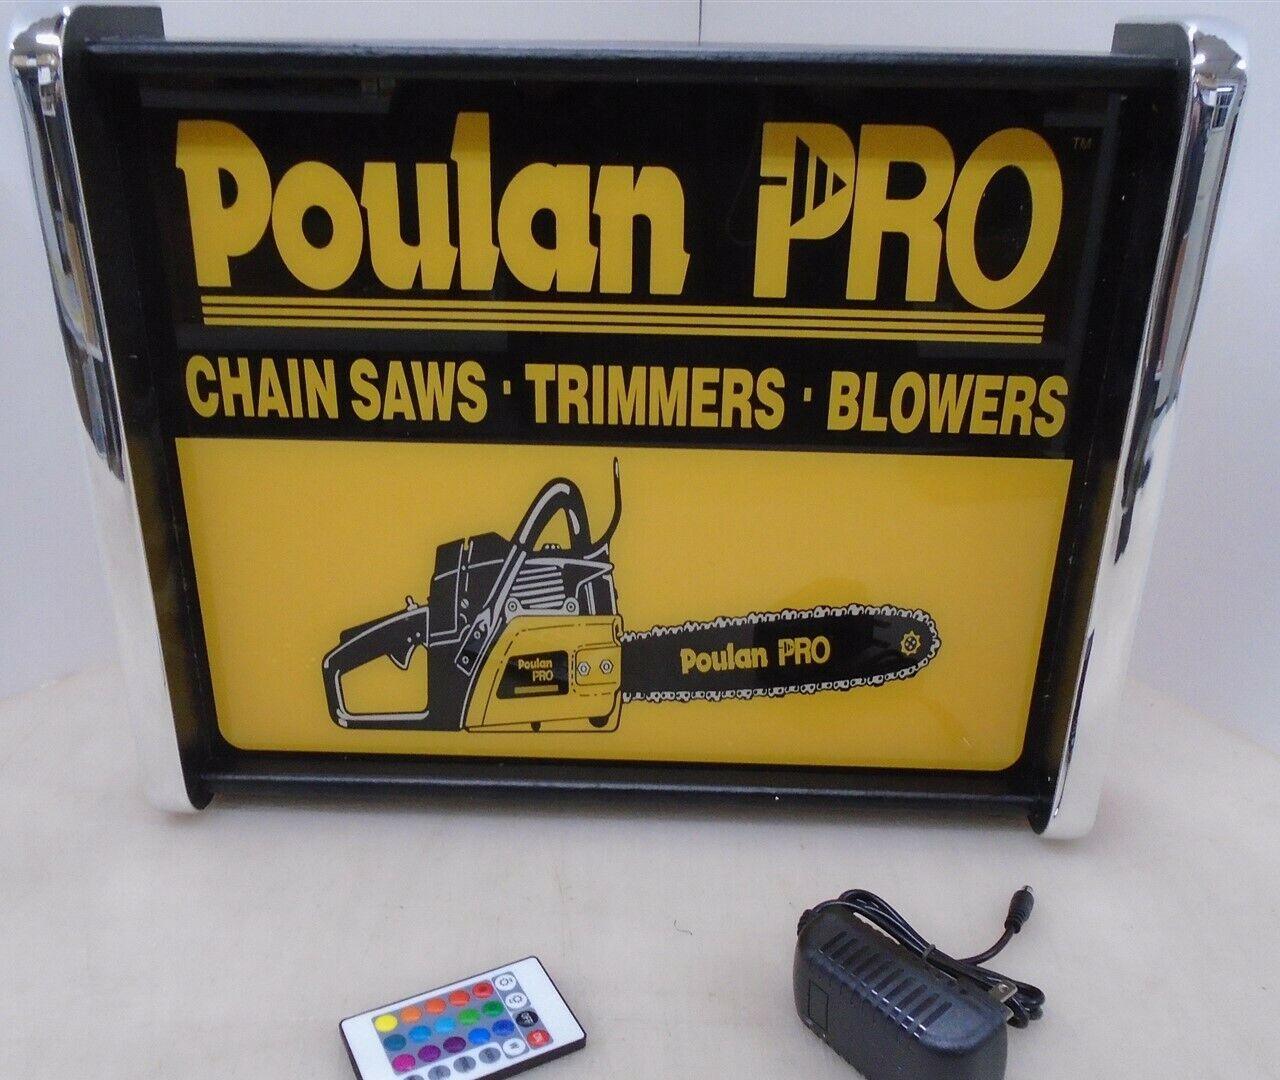 Poulan Pro Chain Saw LED Display light sign box